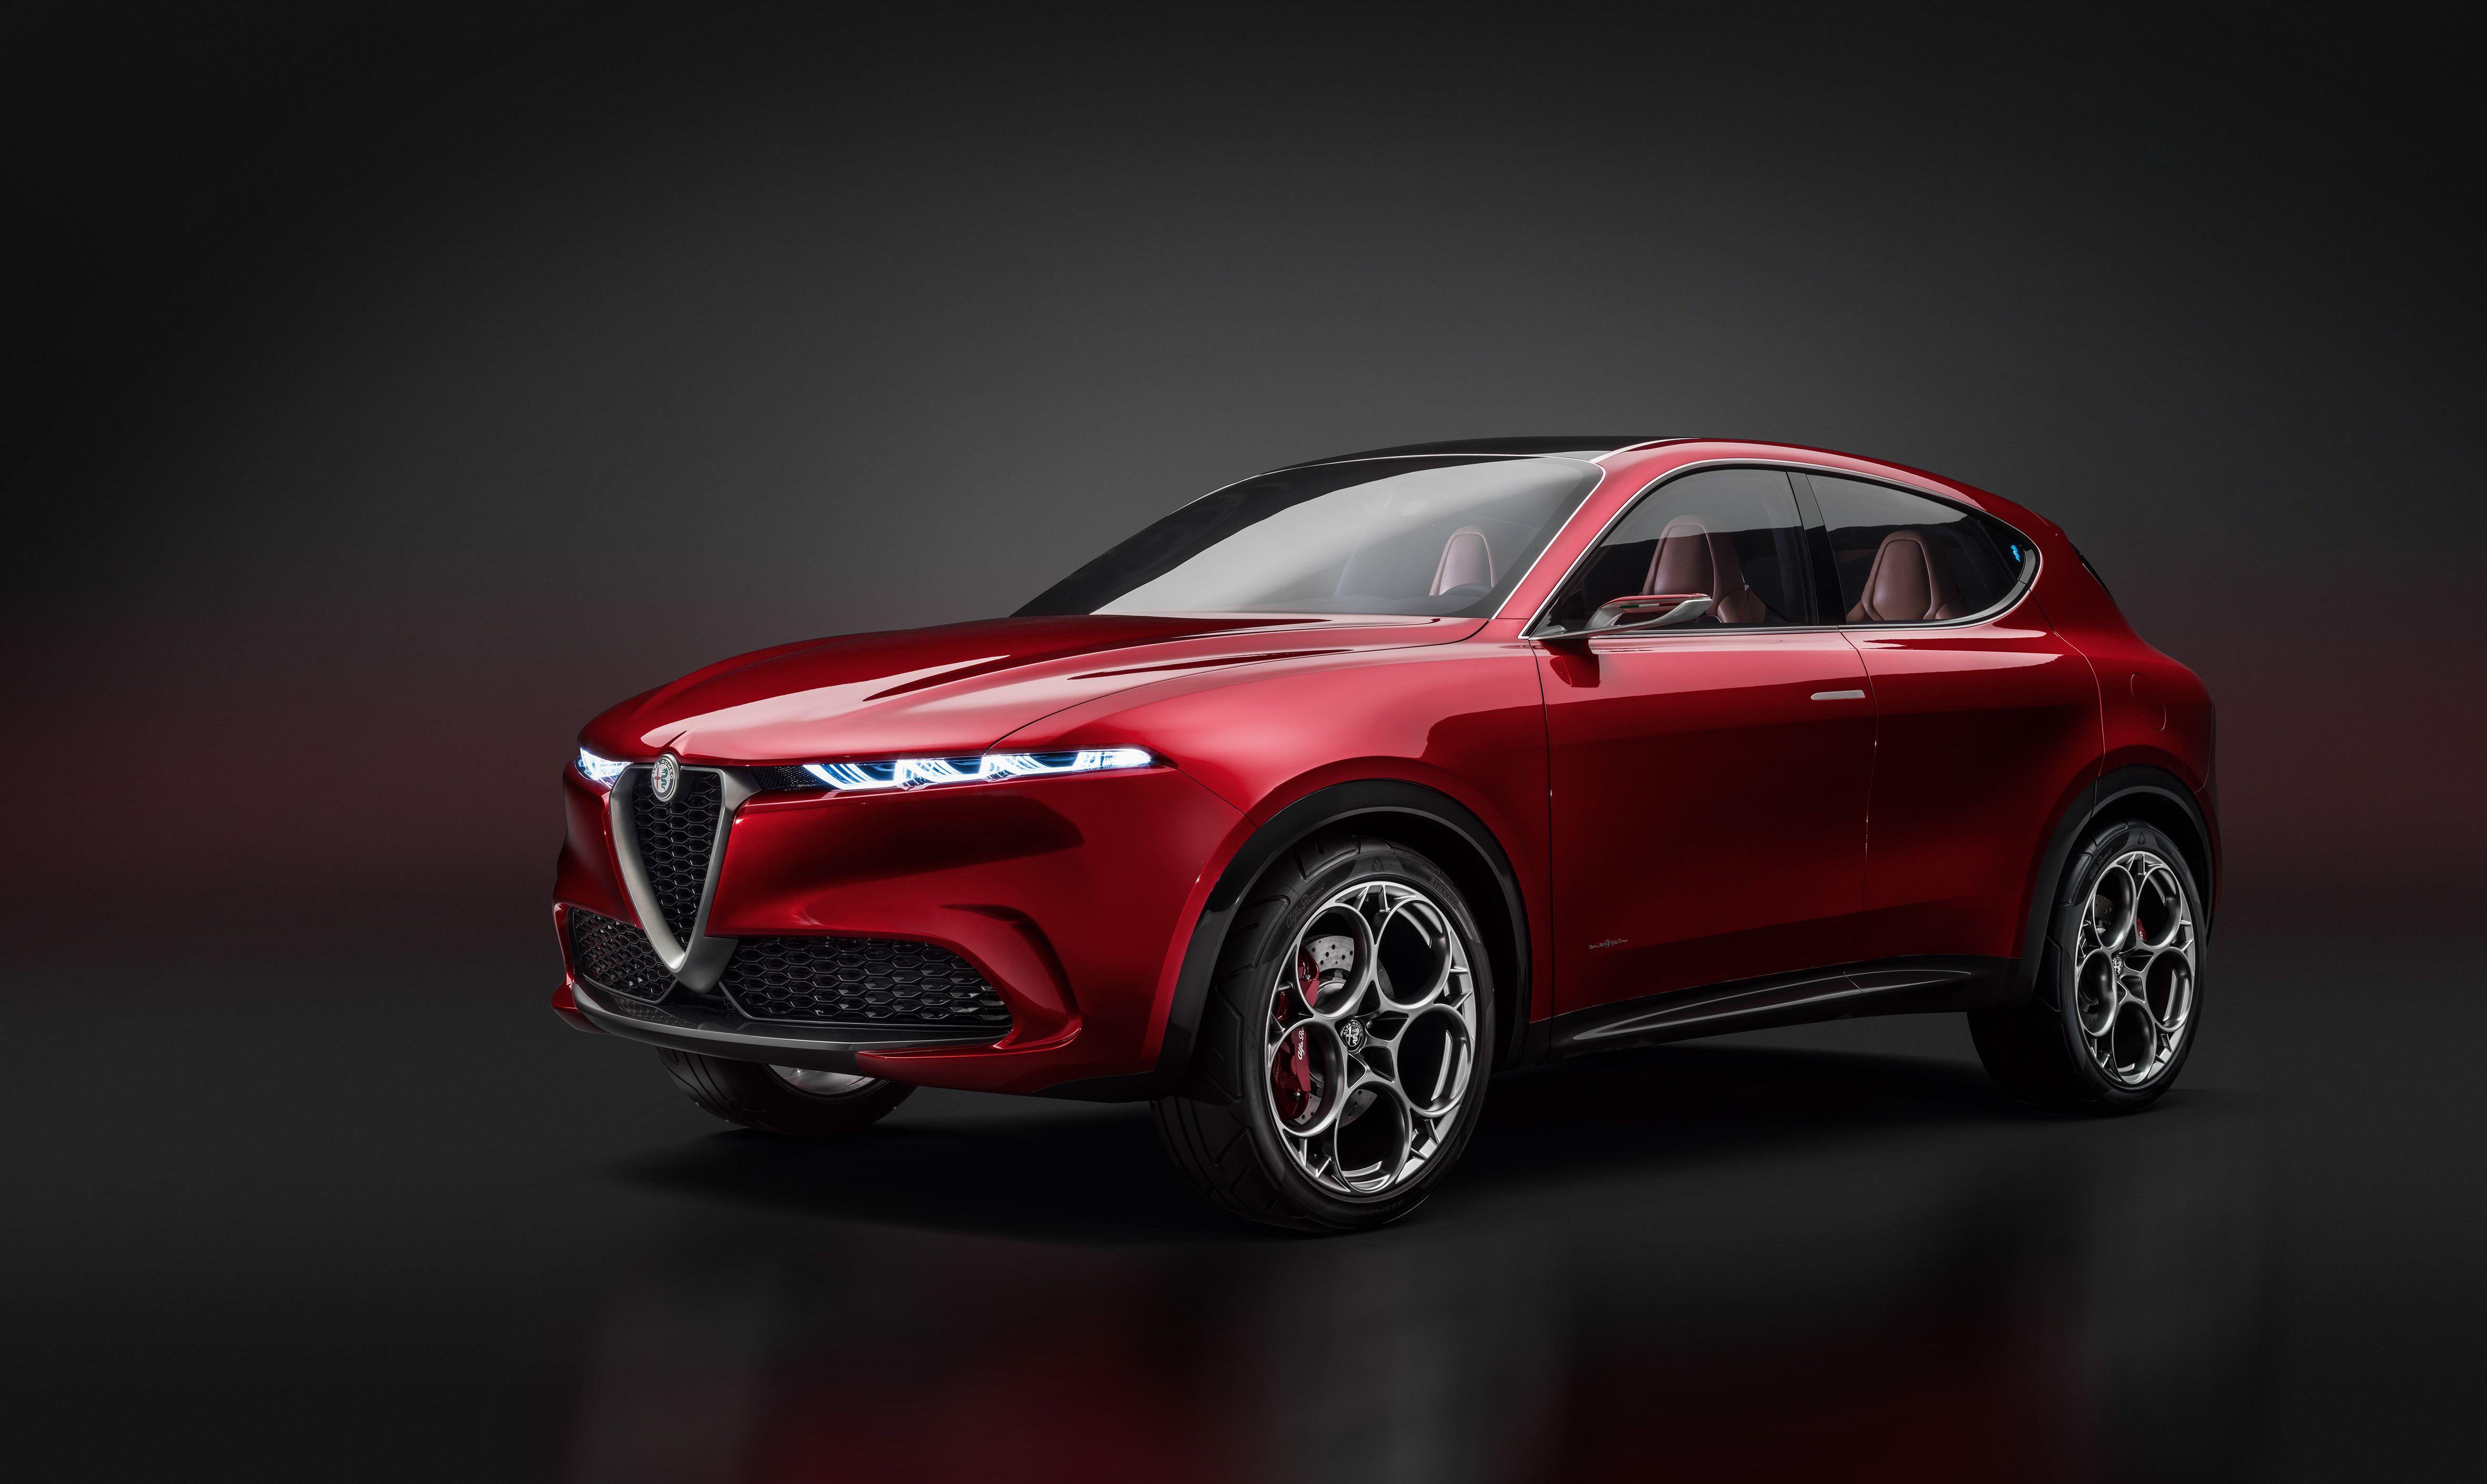 Changes to 2021 Alfa Romeo Models